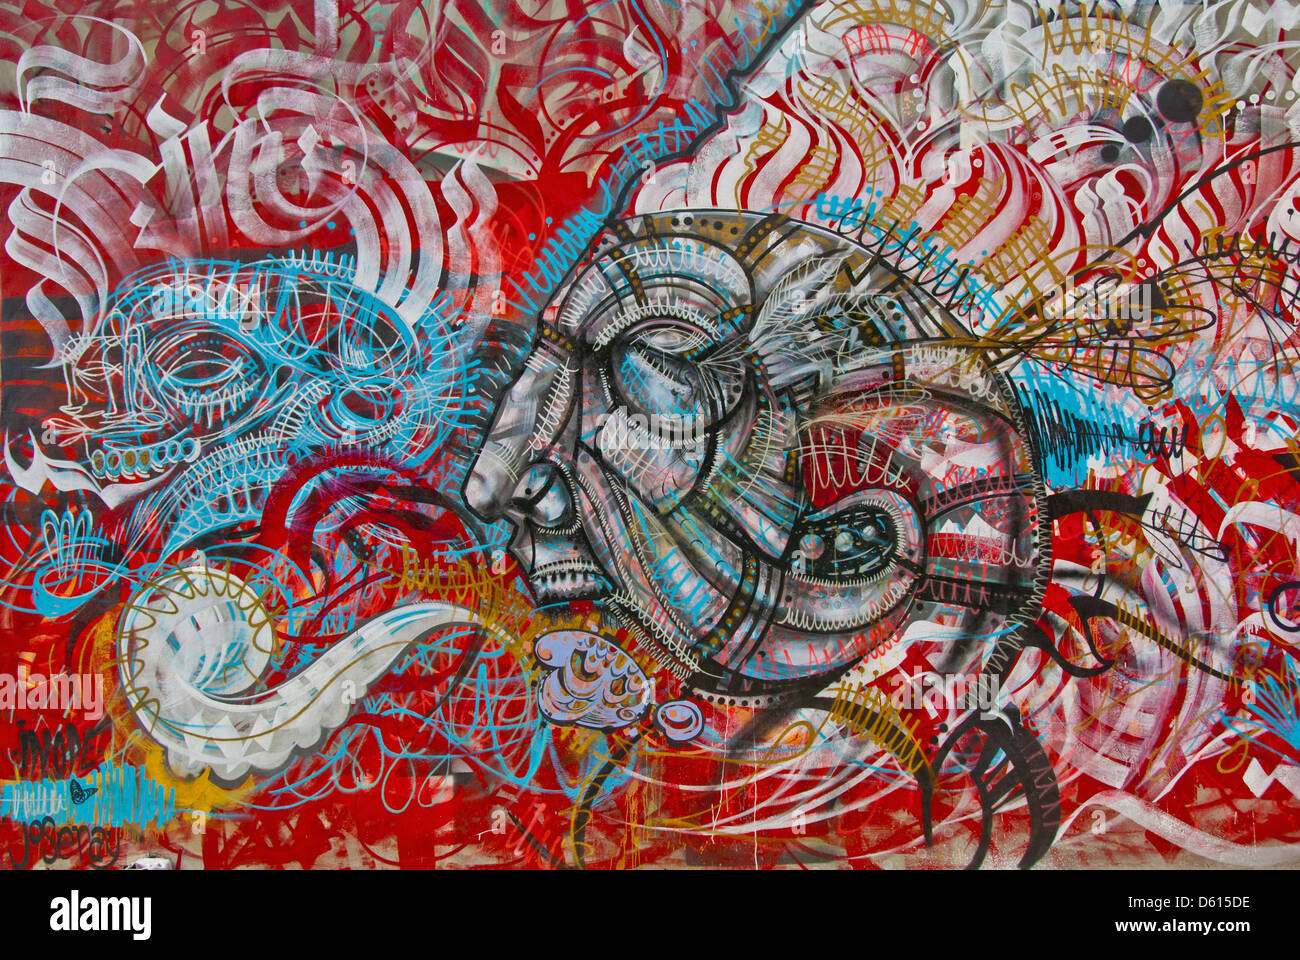 Graffiti murale di Inope, Hebermehl e Jose Ray in Wynwood Arts District di Miami, Florida, Stati Uniti d'America Foto Stock